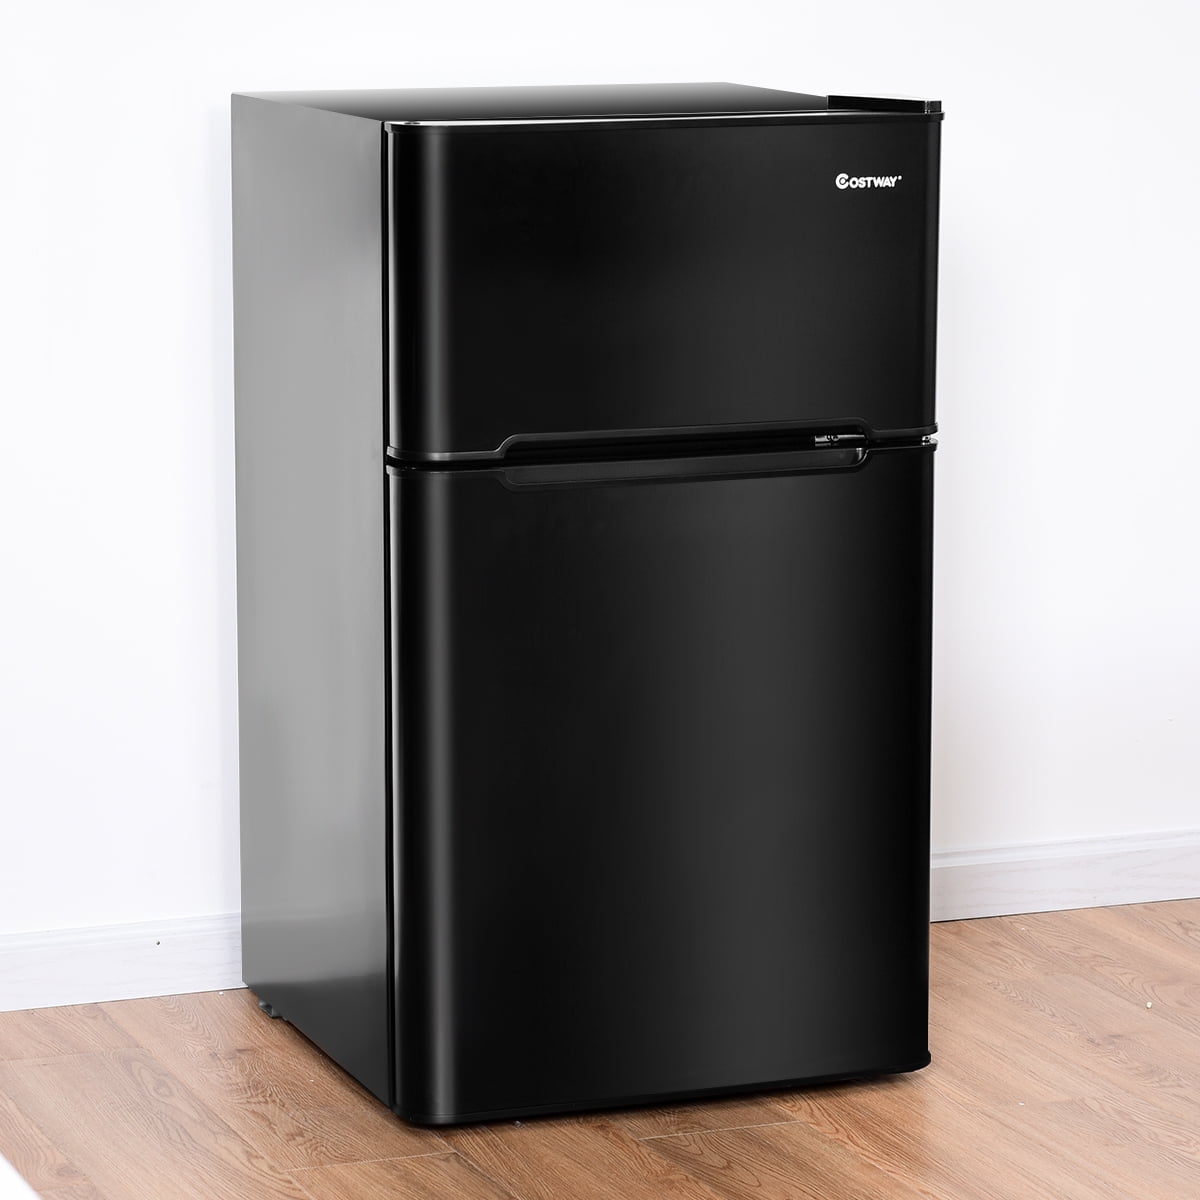 costway-refrigerator-small-freezer-cooler-fridge-compact-3-2-cu-ft